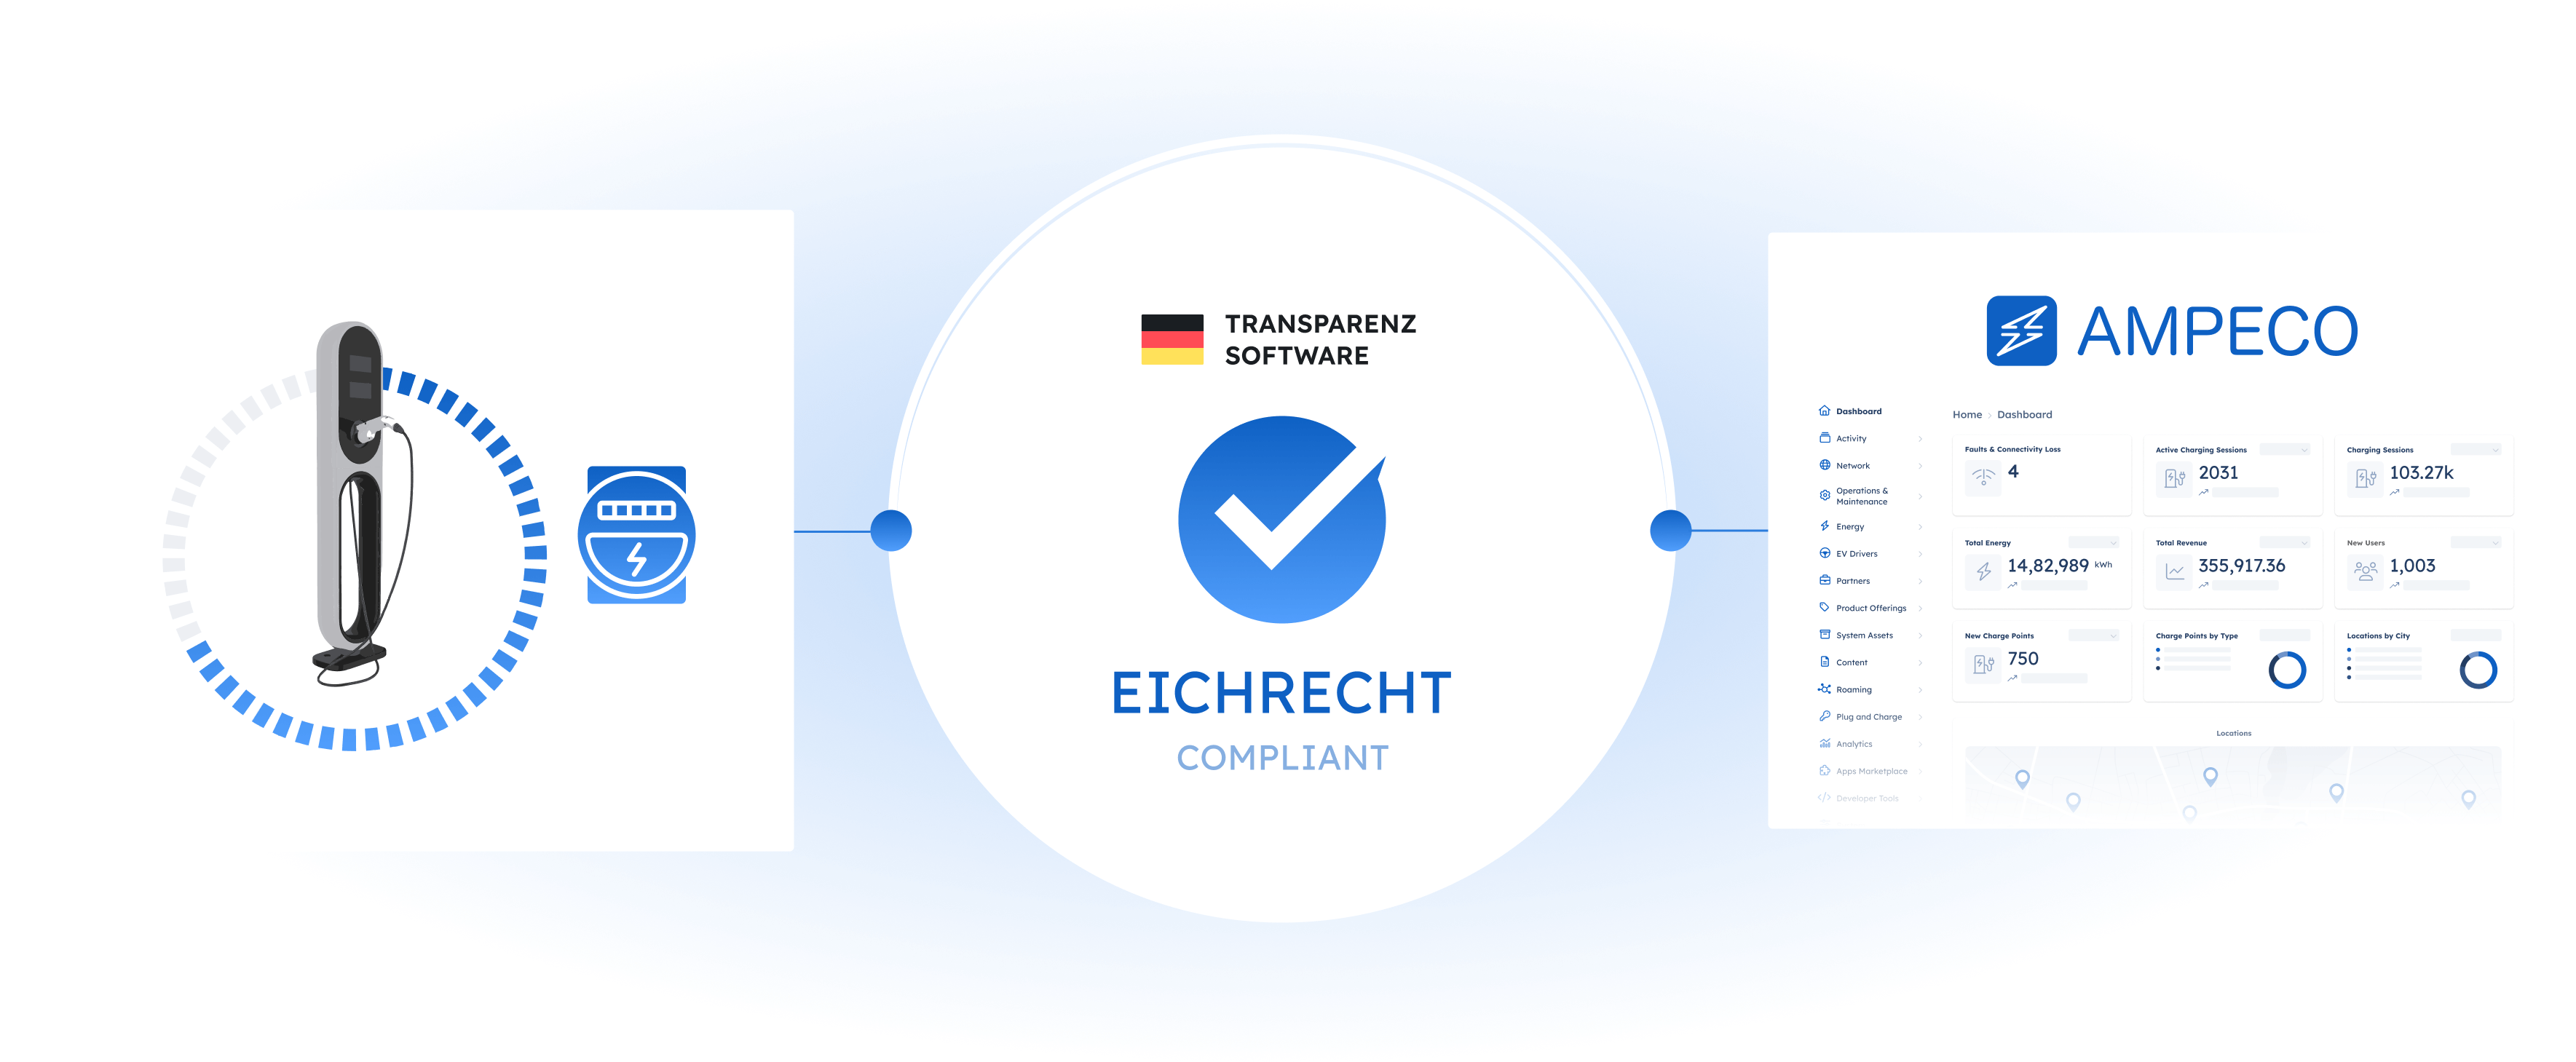 illustration of Eichrecht compliant data charging station meter transparenzsotftware